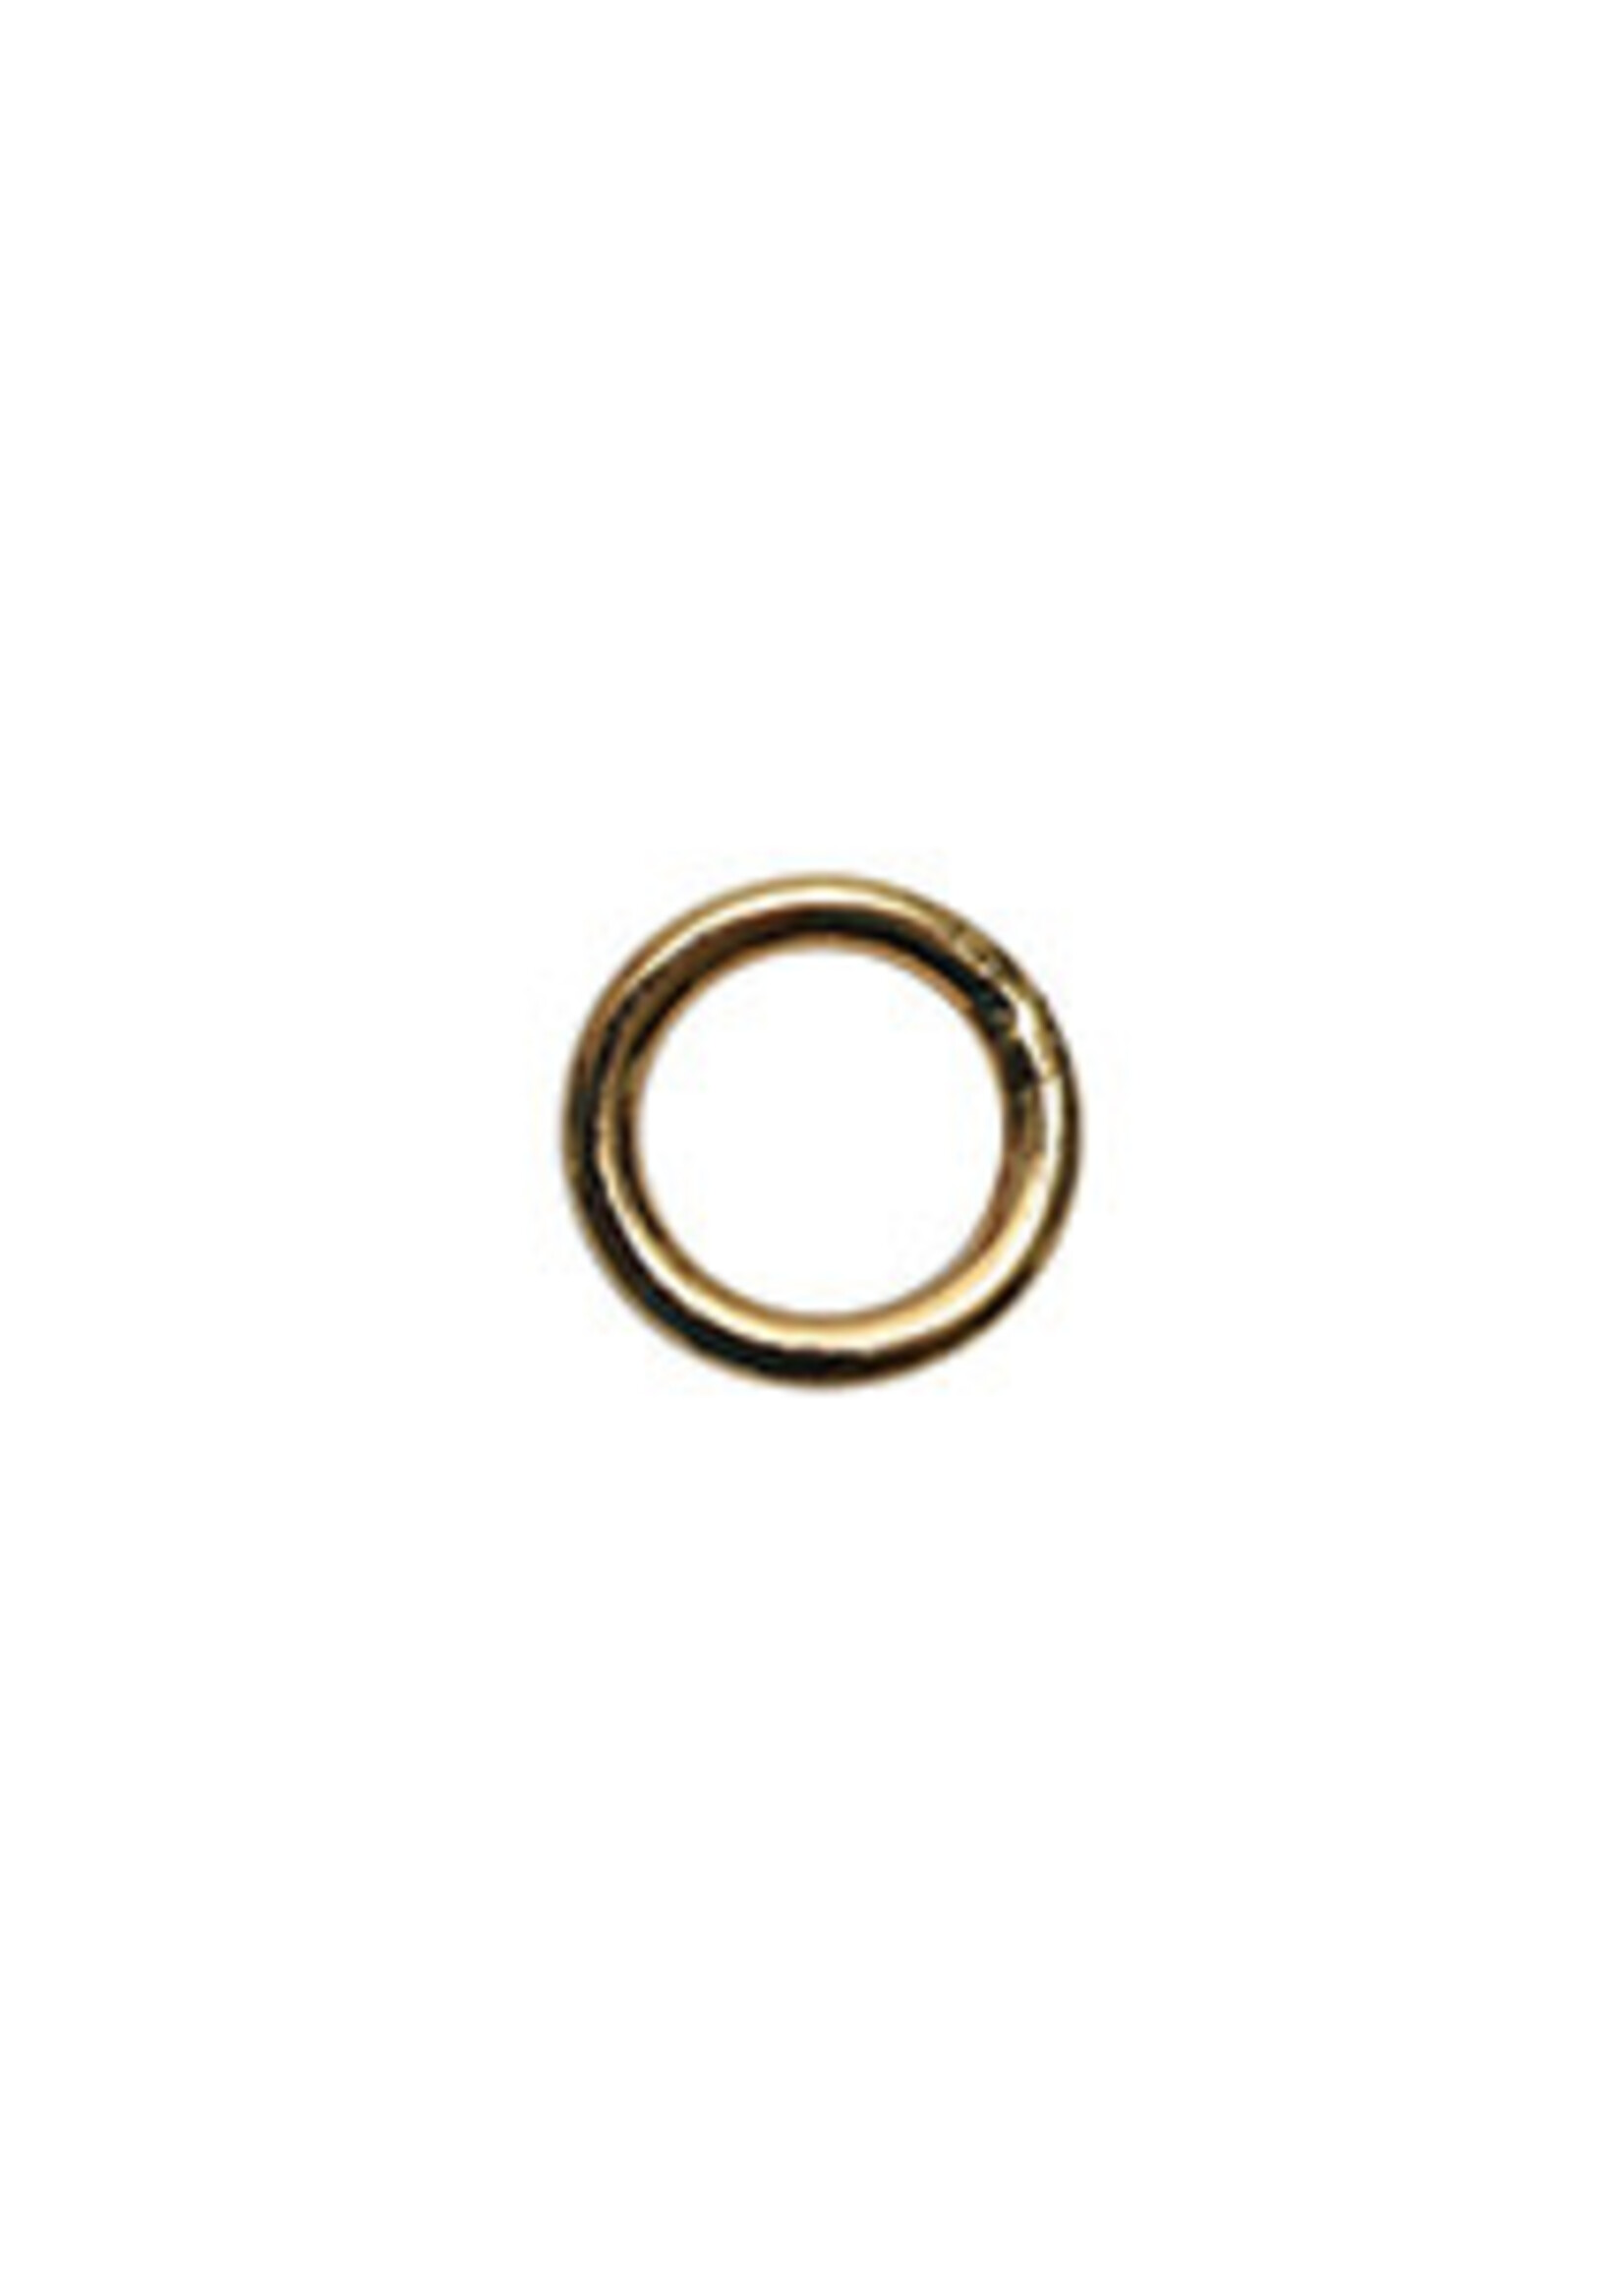 6mm Closed Ring 19ga Gold Plate Qty 12